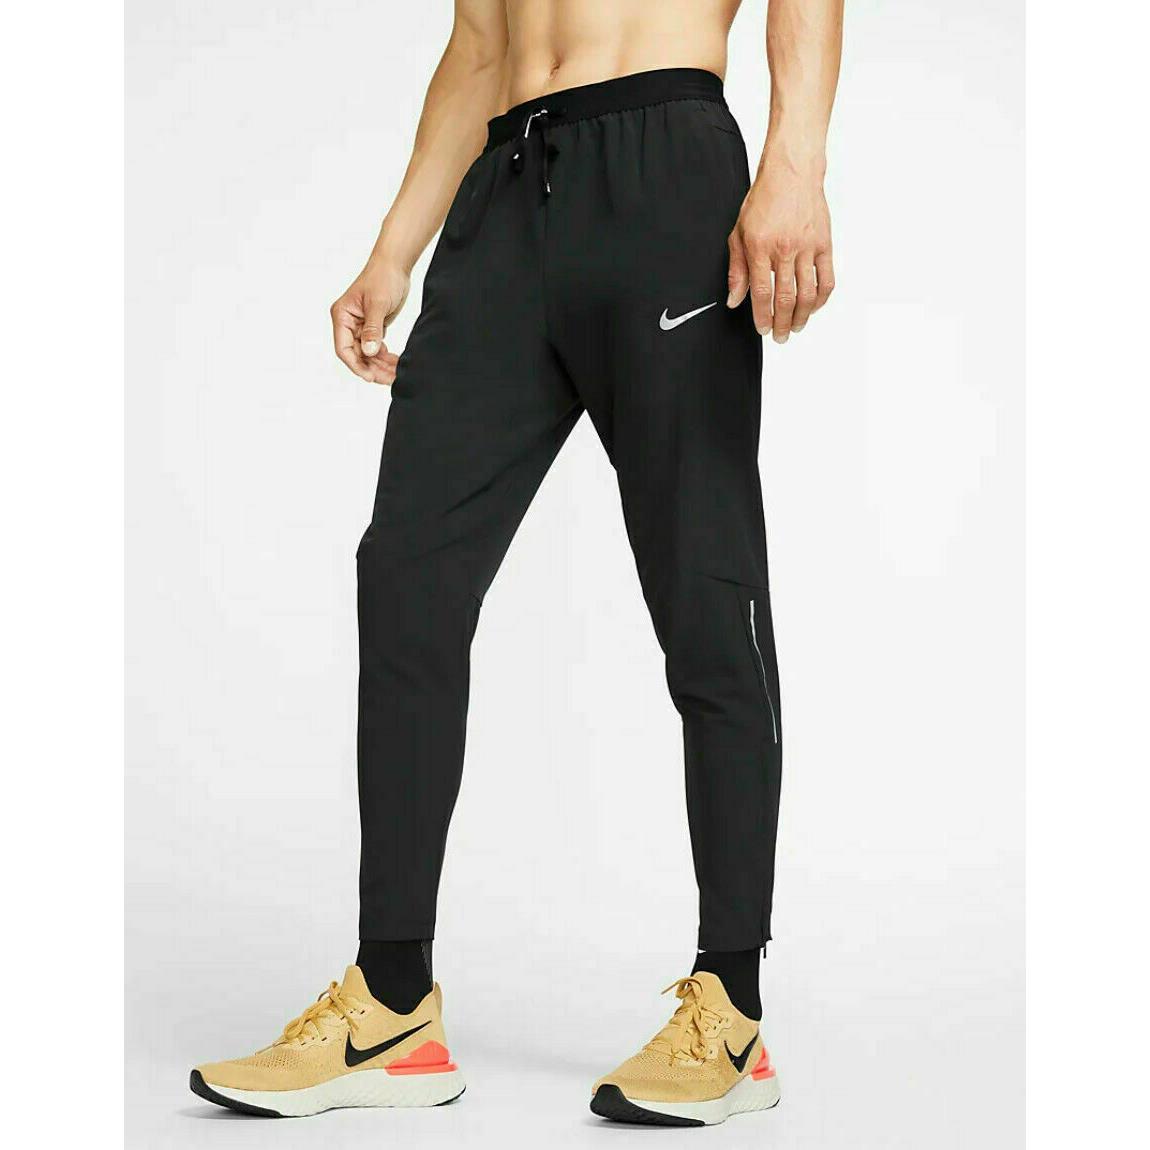 Nike Men Phenom Elite Woven Running Pants Size L Trousers BV4815-010 Black